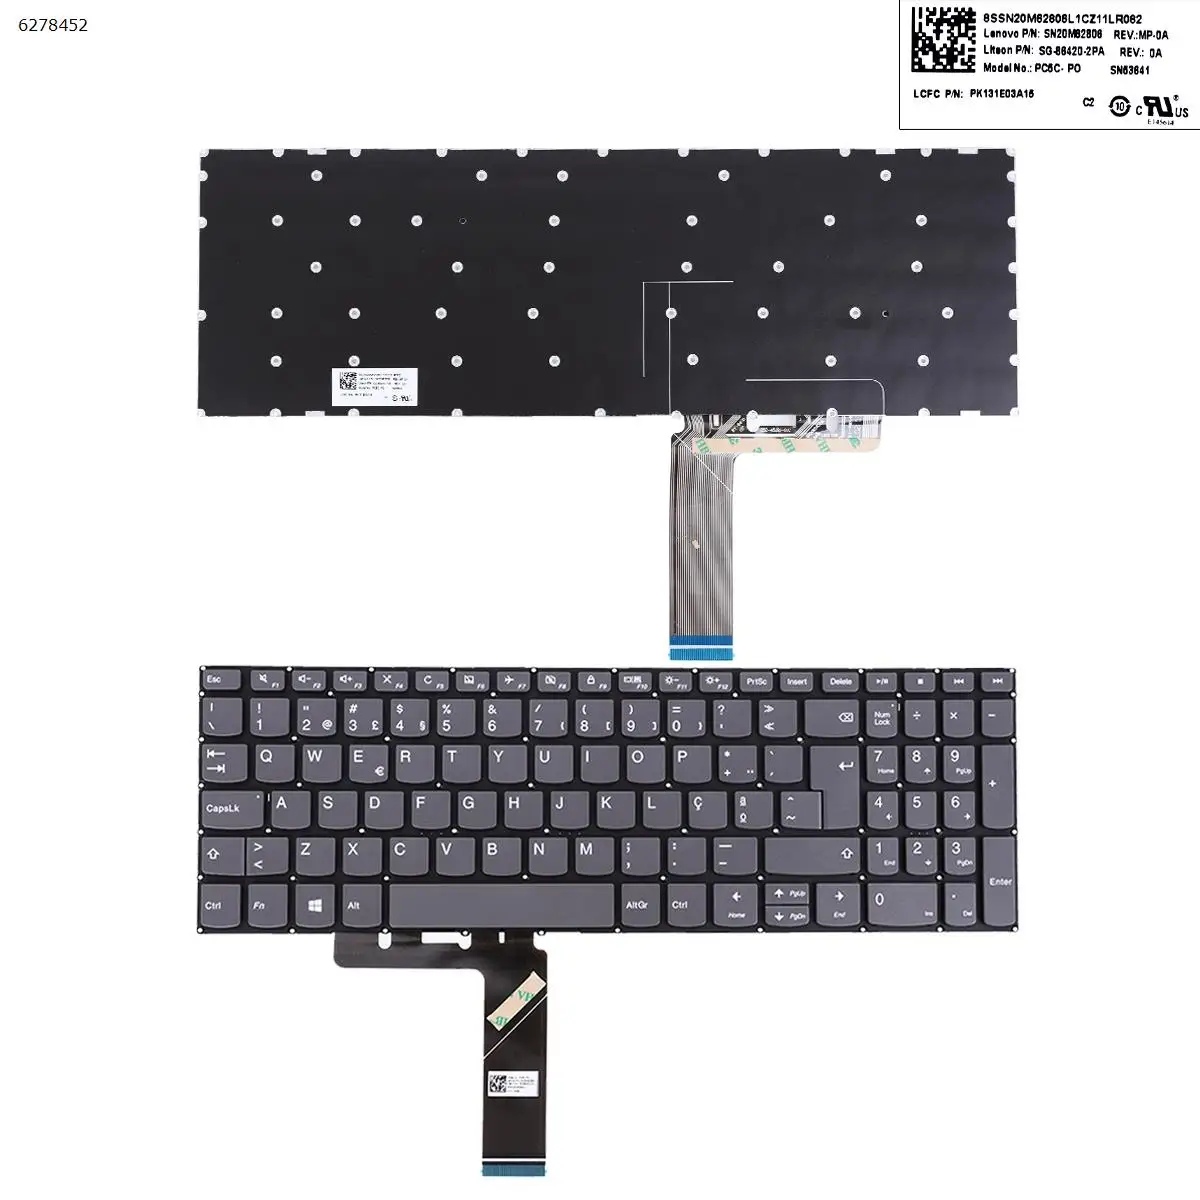 

PO Laptop Keyboard for Lenovo IdeaPad 720s-15isk 720s-15ikb v330-15ikb v330-15isk GRAY